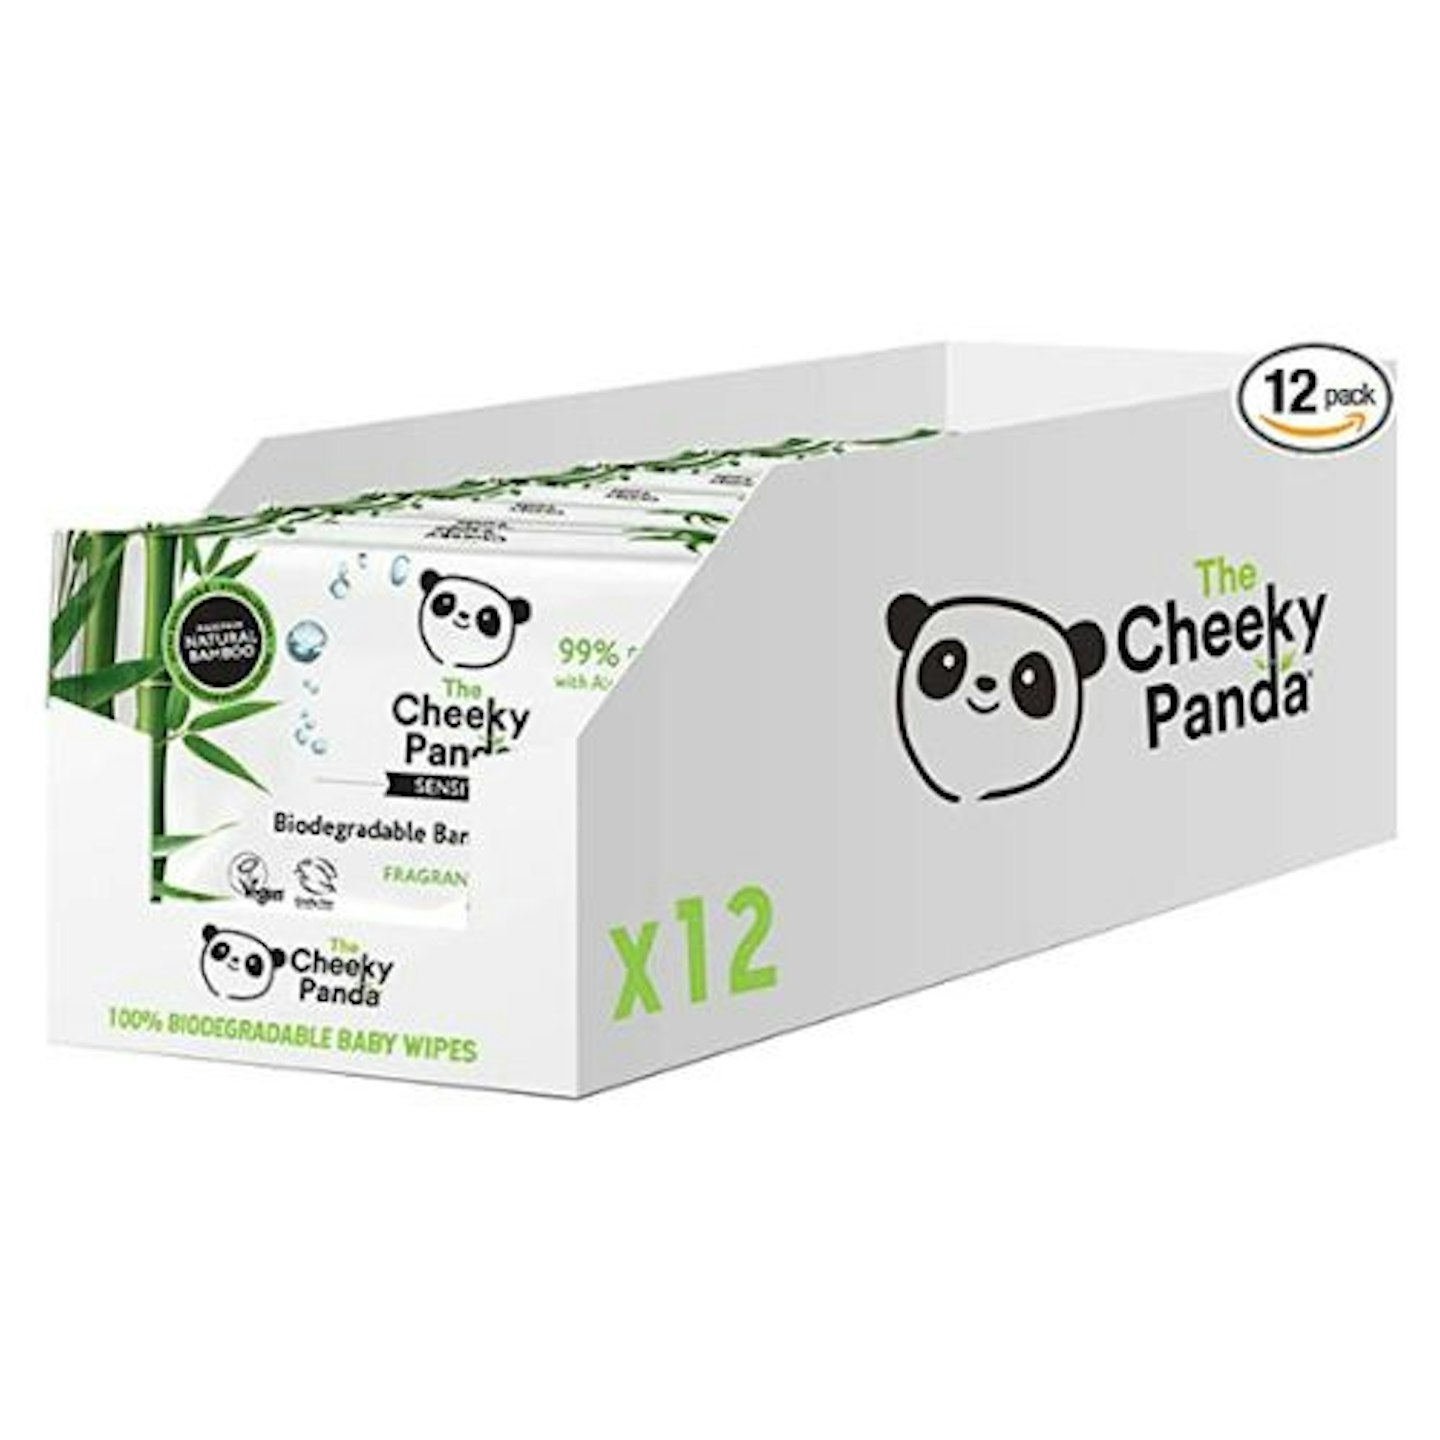 The Cheeky Panda Bamboo Biodegradable Baby Wipes